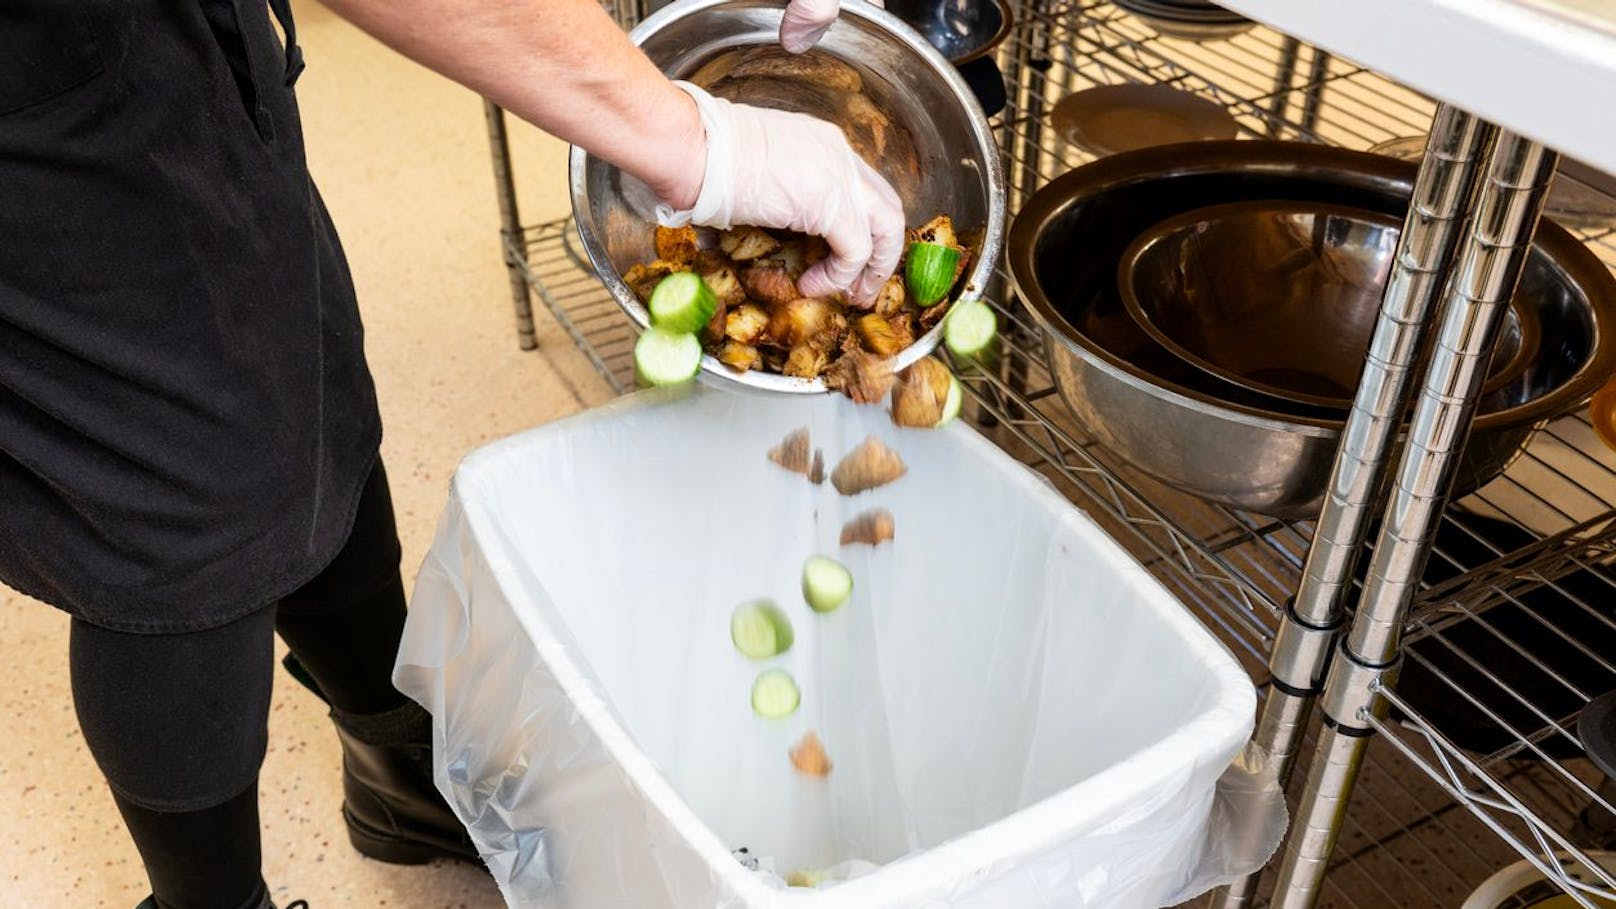 Angestellte retten Lebensmittel vor Müll – entlassen